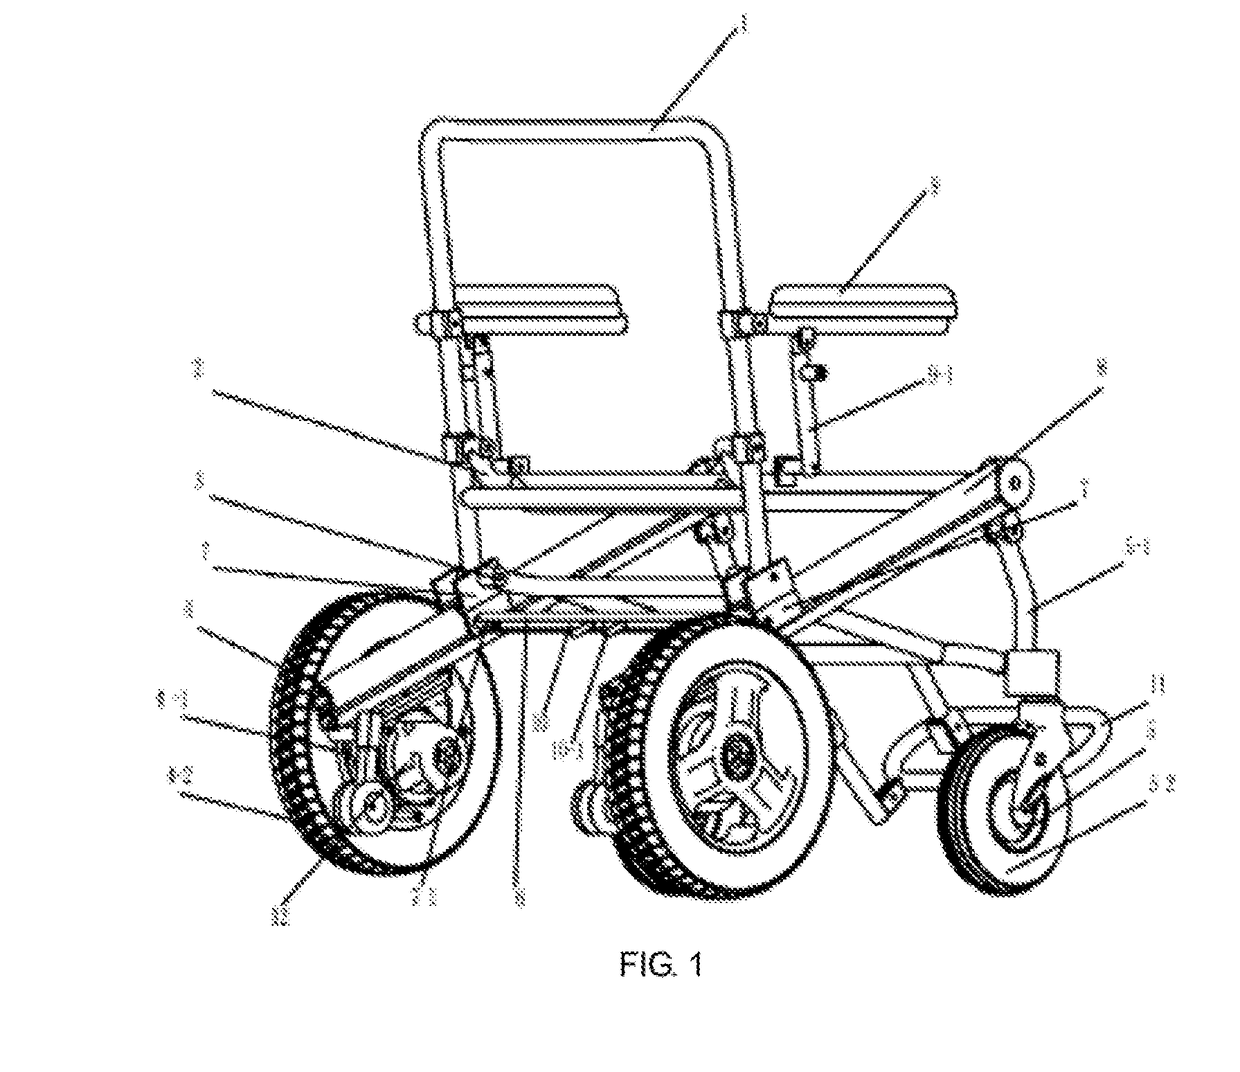 Folding wheelchair